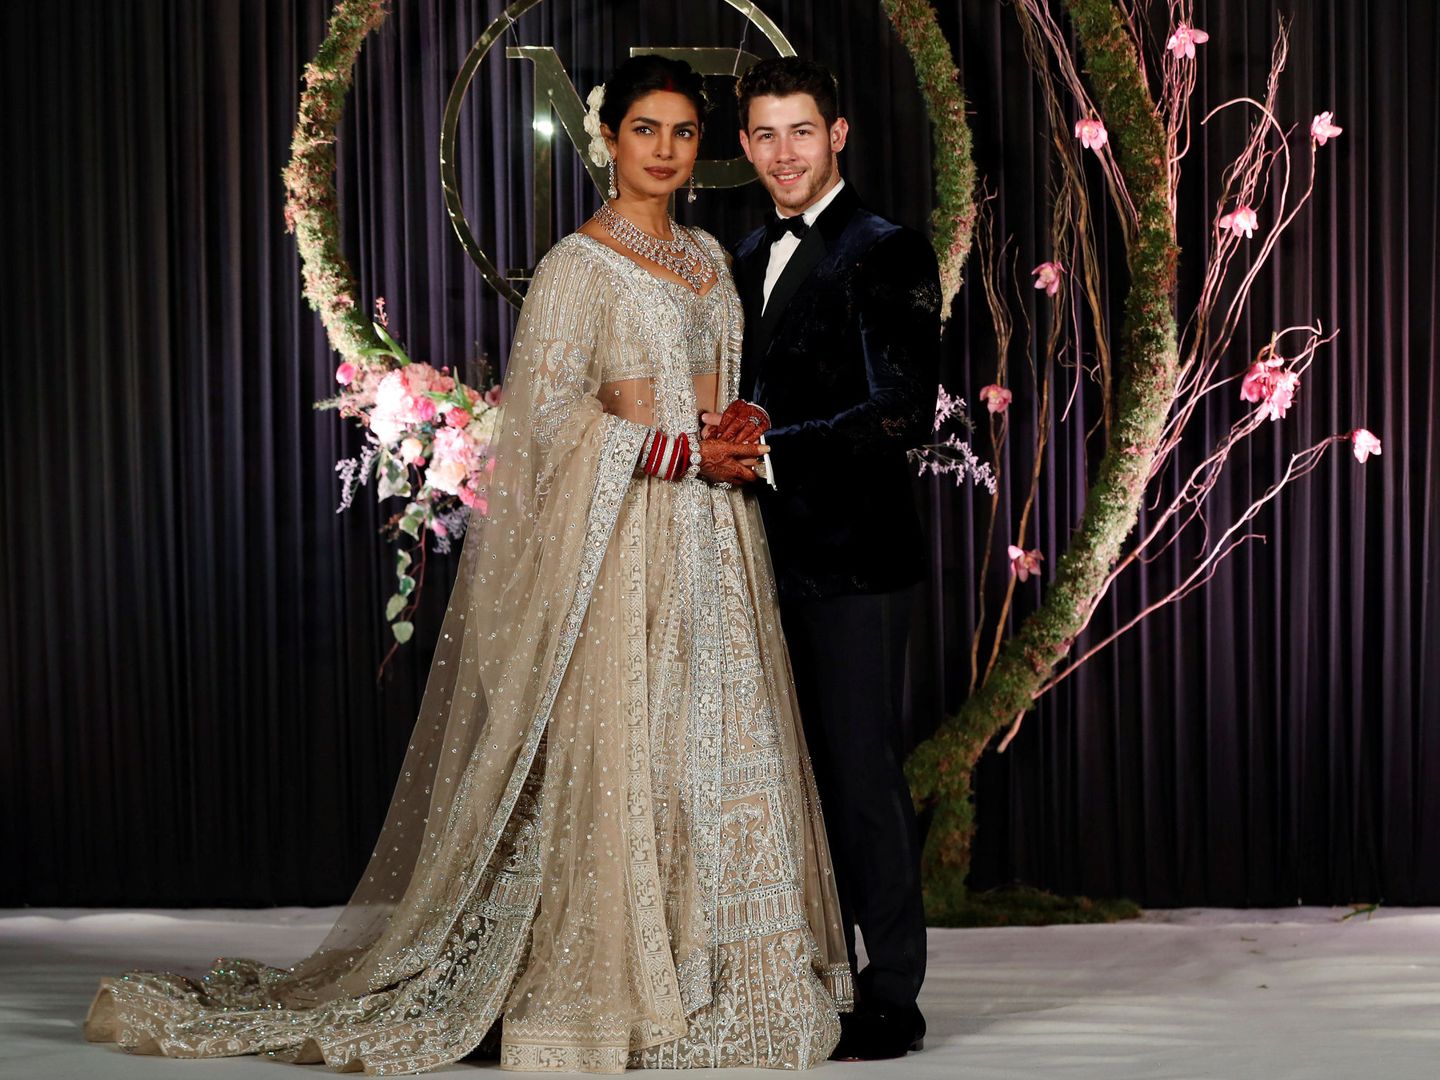 La boda de Priyanka Chopra y Nick Jonas. (Reuters)